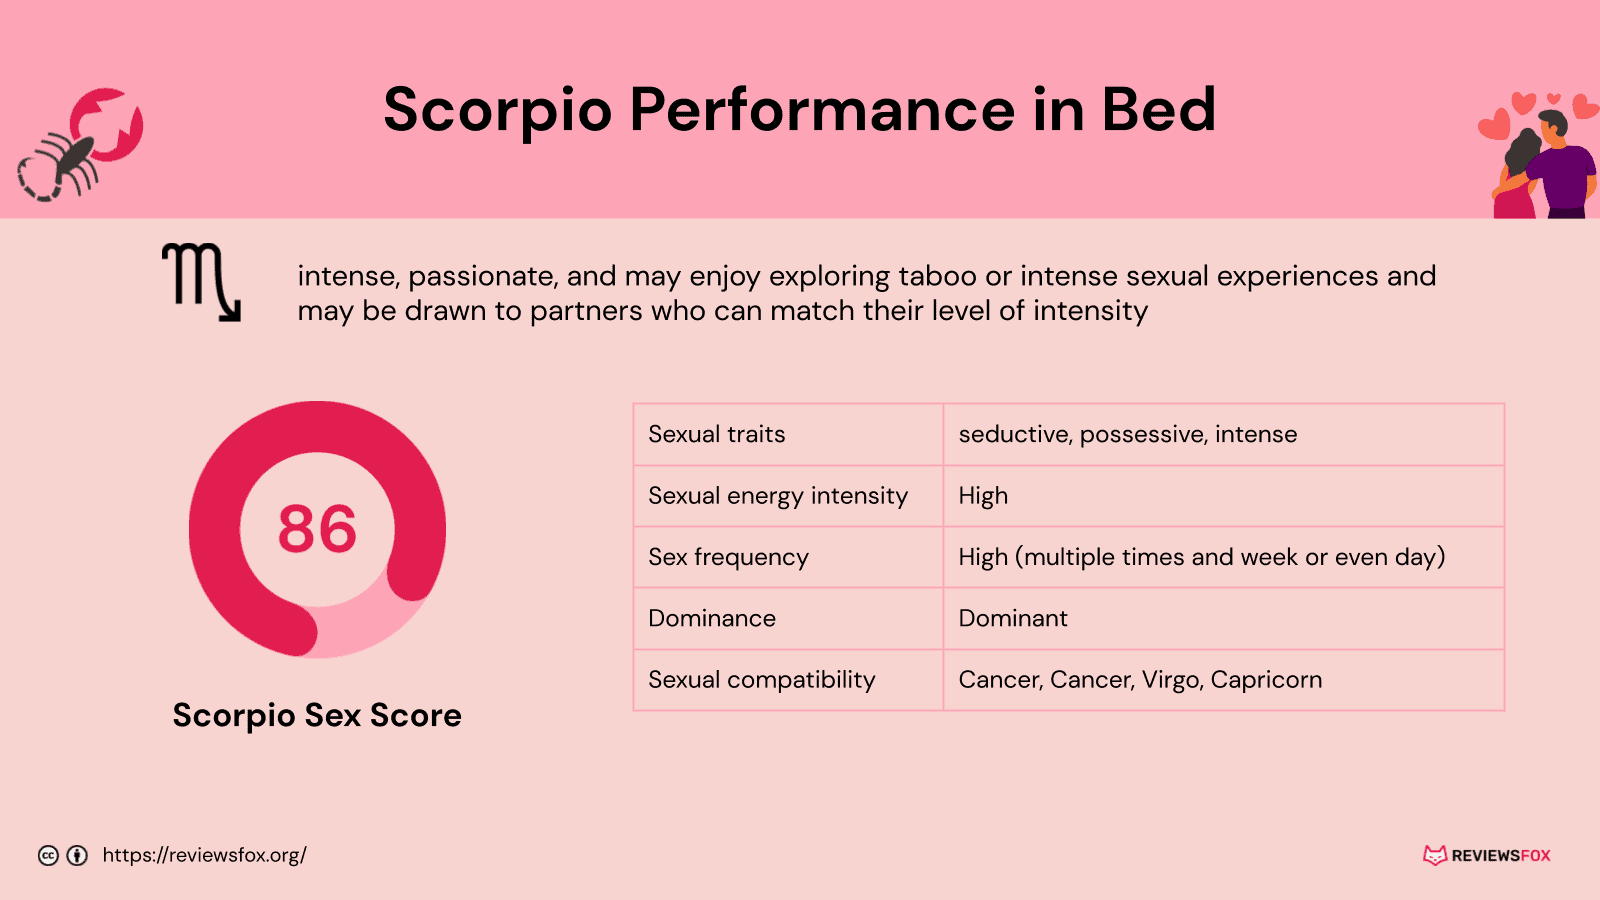 Are Scorpio Good in Bed?